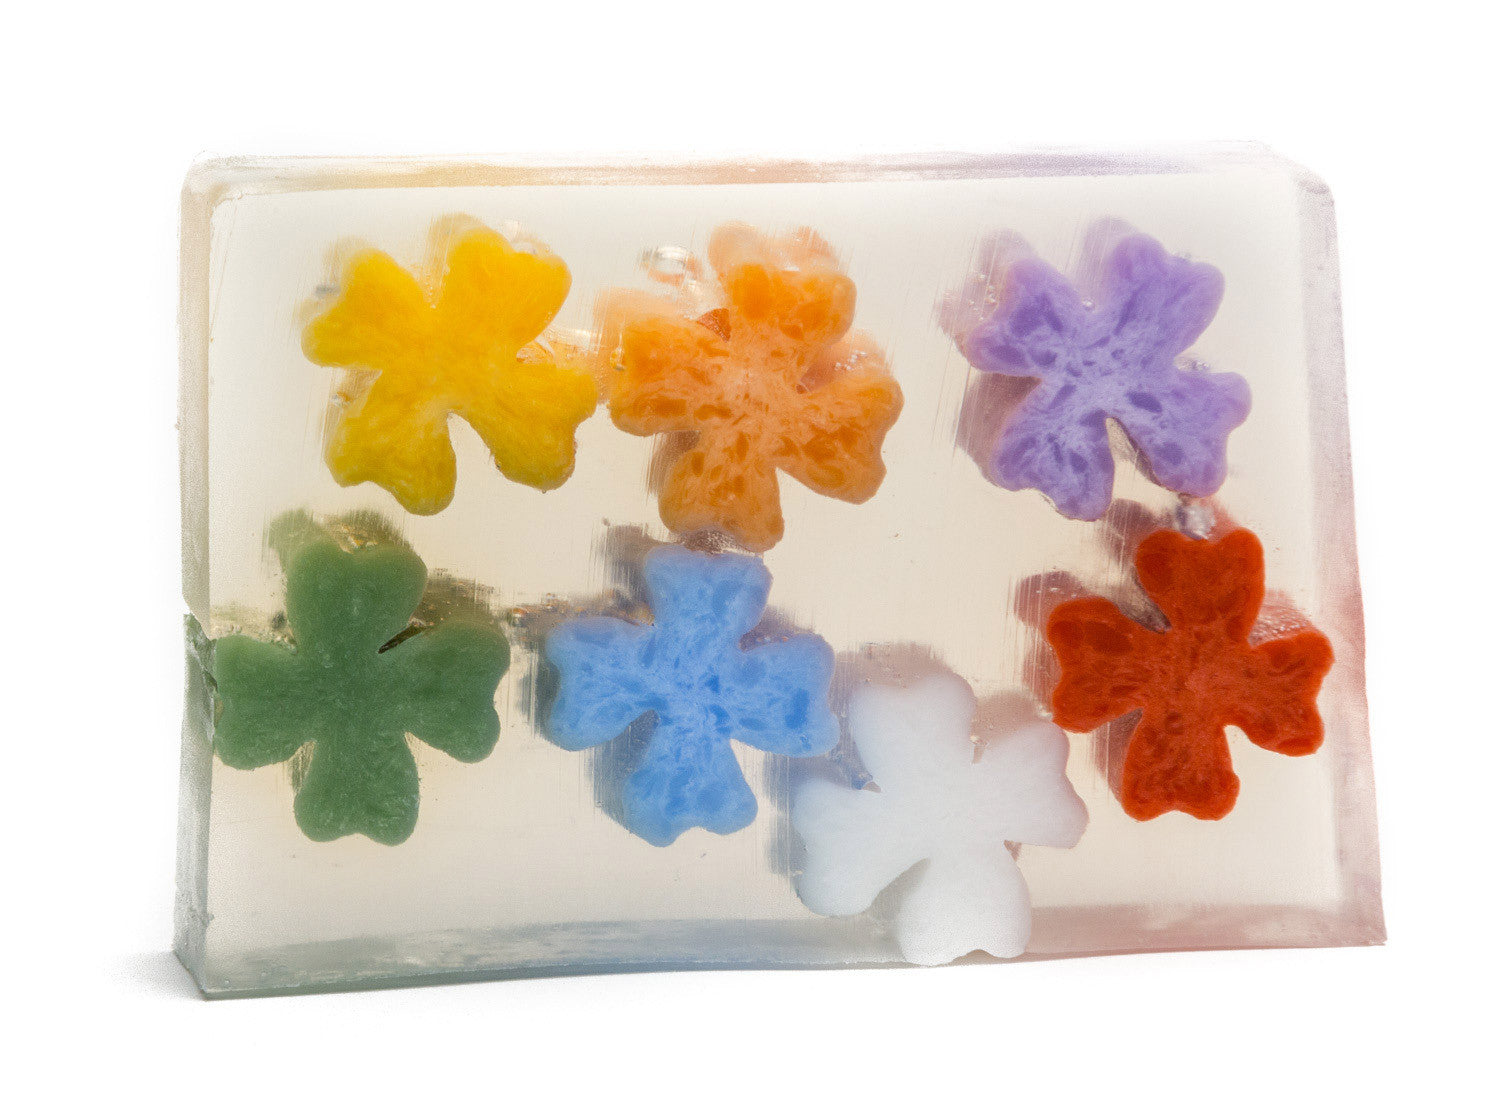 FLOWER CHILD SOAP SLICE 5.5 oz.